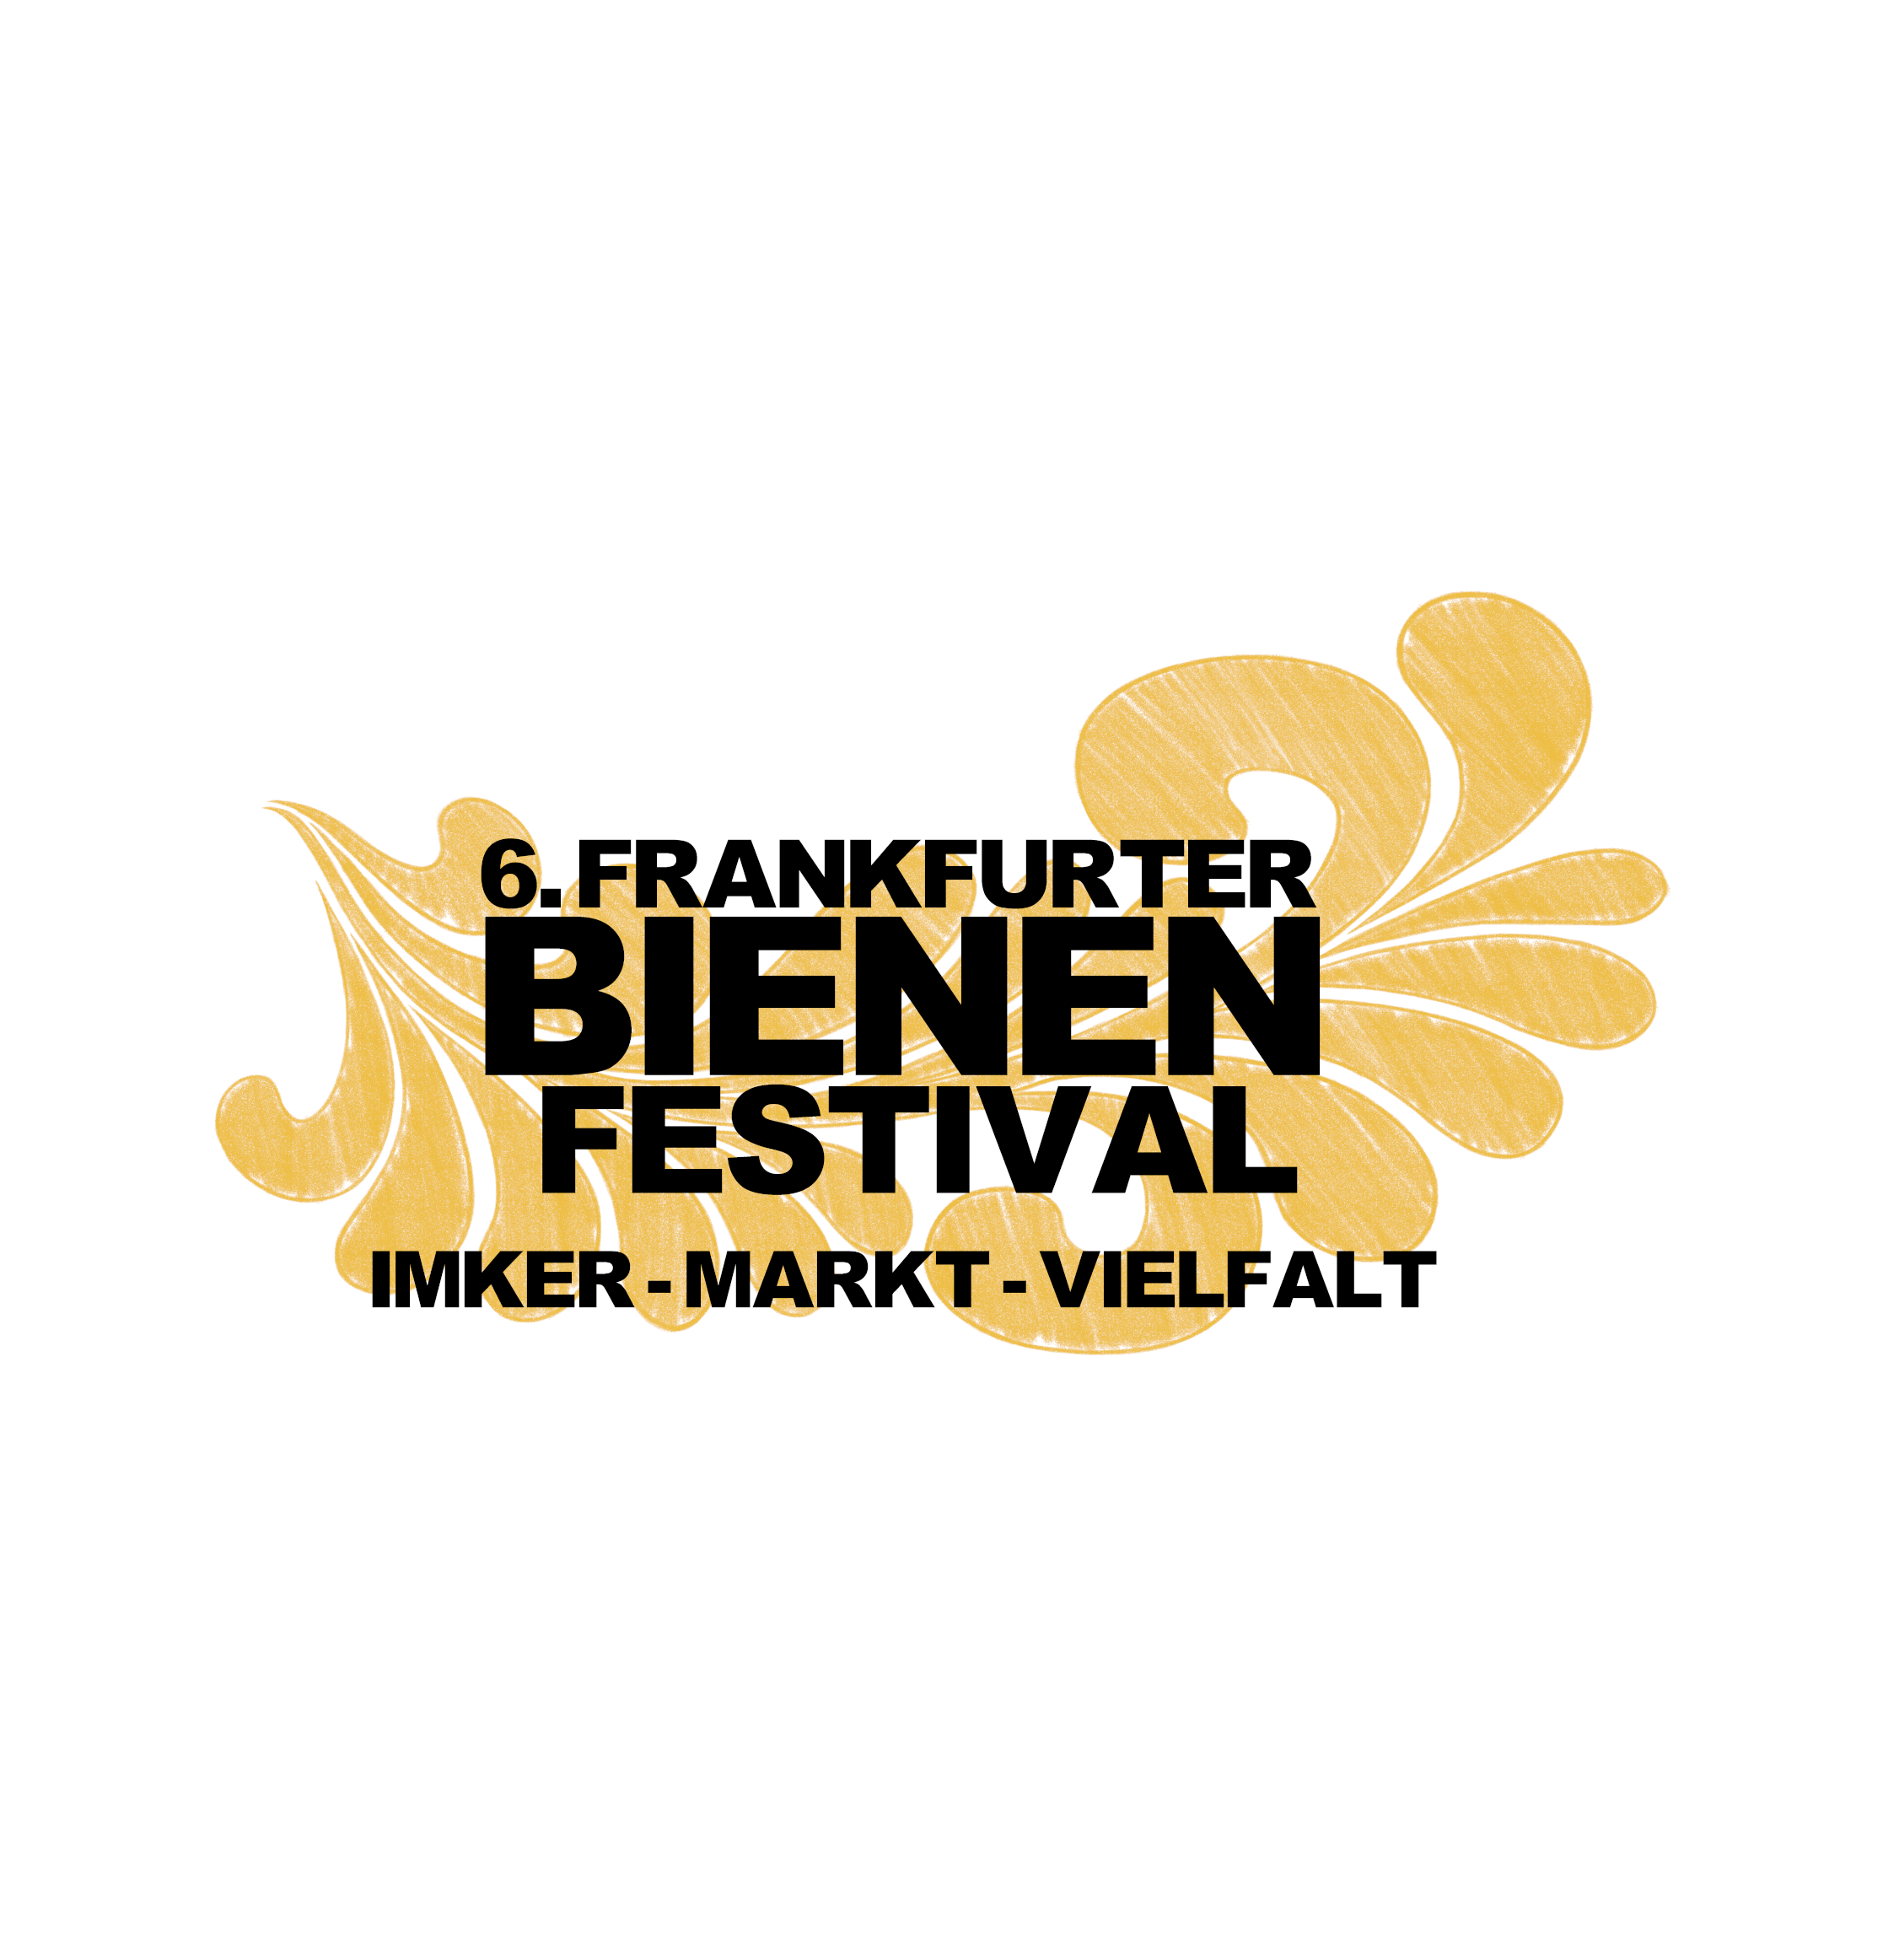 (c) Frankfurter-bienenfestival.de